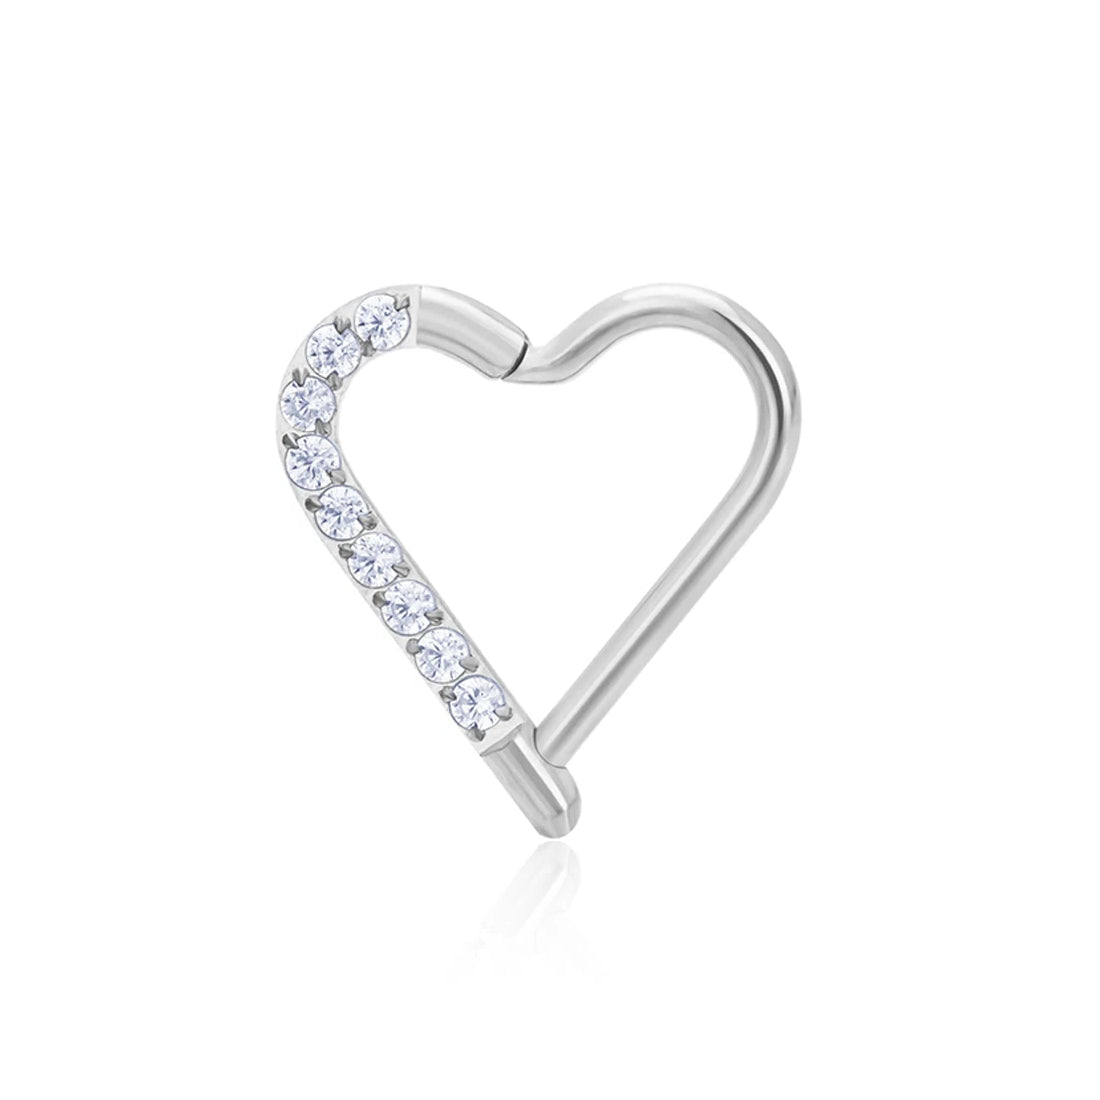 Daith corazón piercing anillo daith de oro y plata titanio 16G con piedras CZ clicker de segmento con bisagras